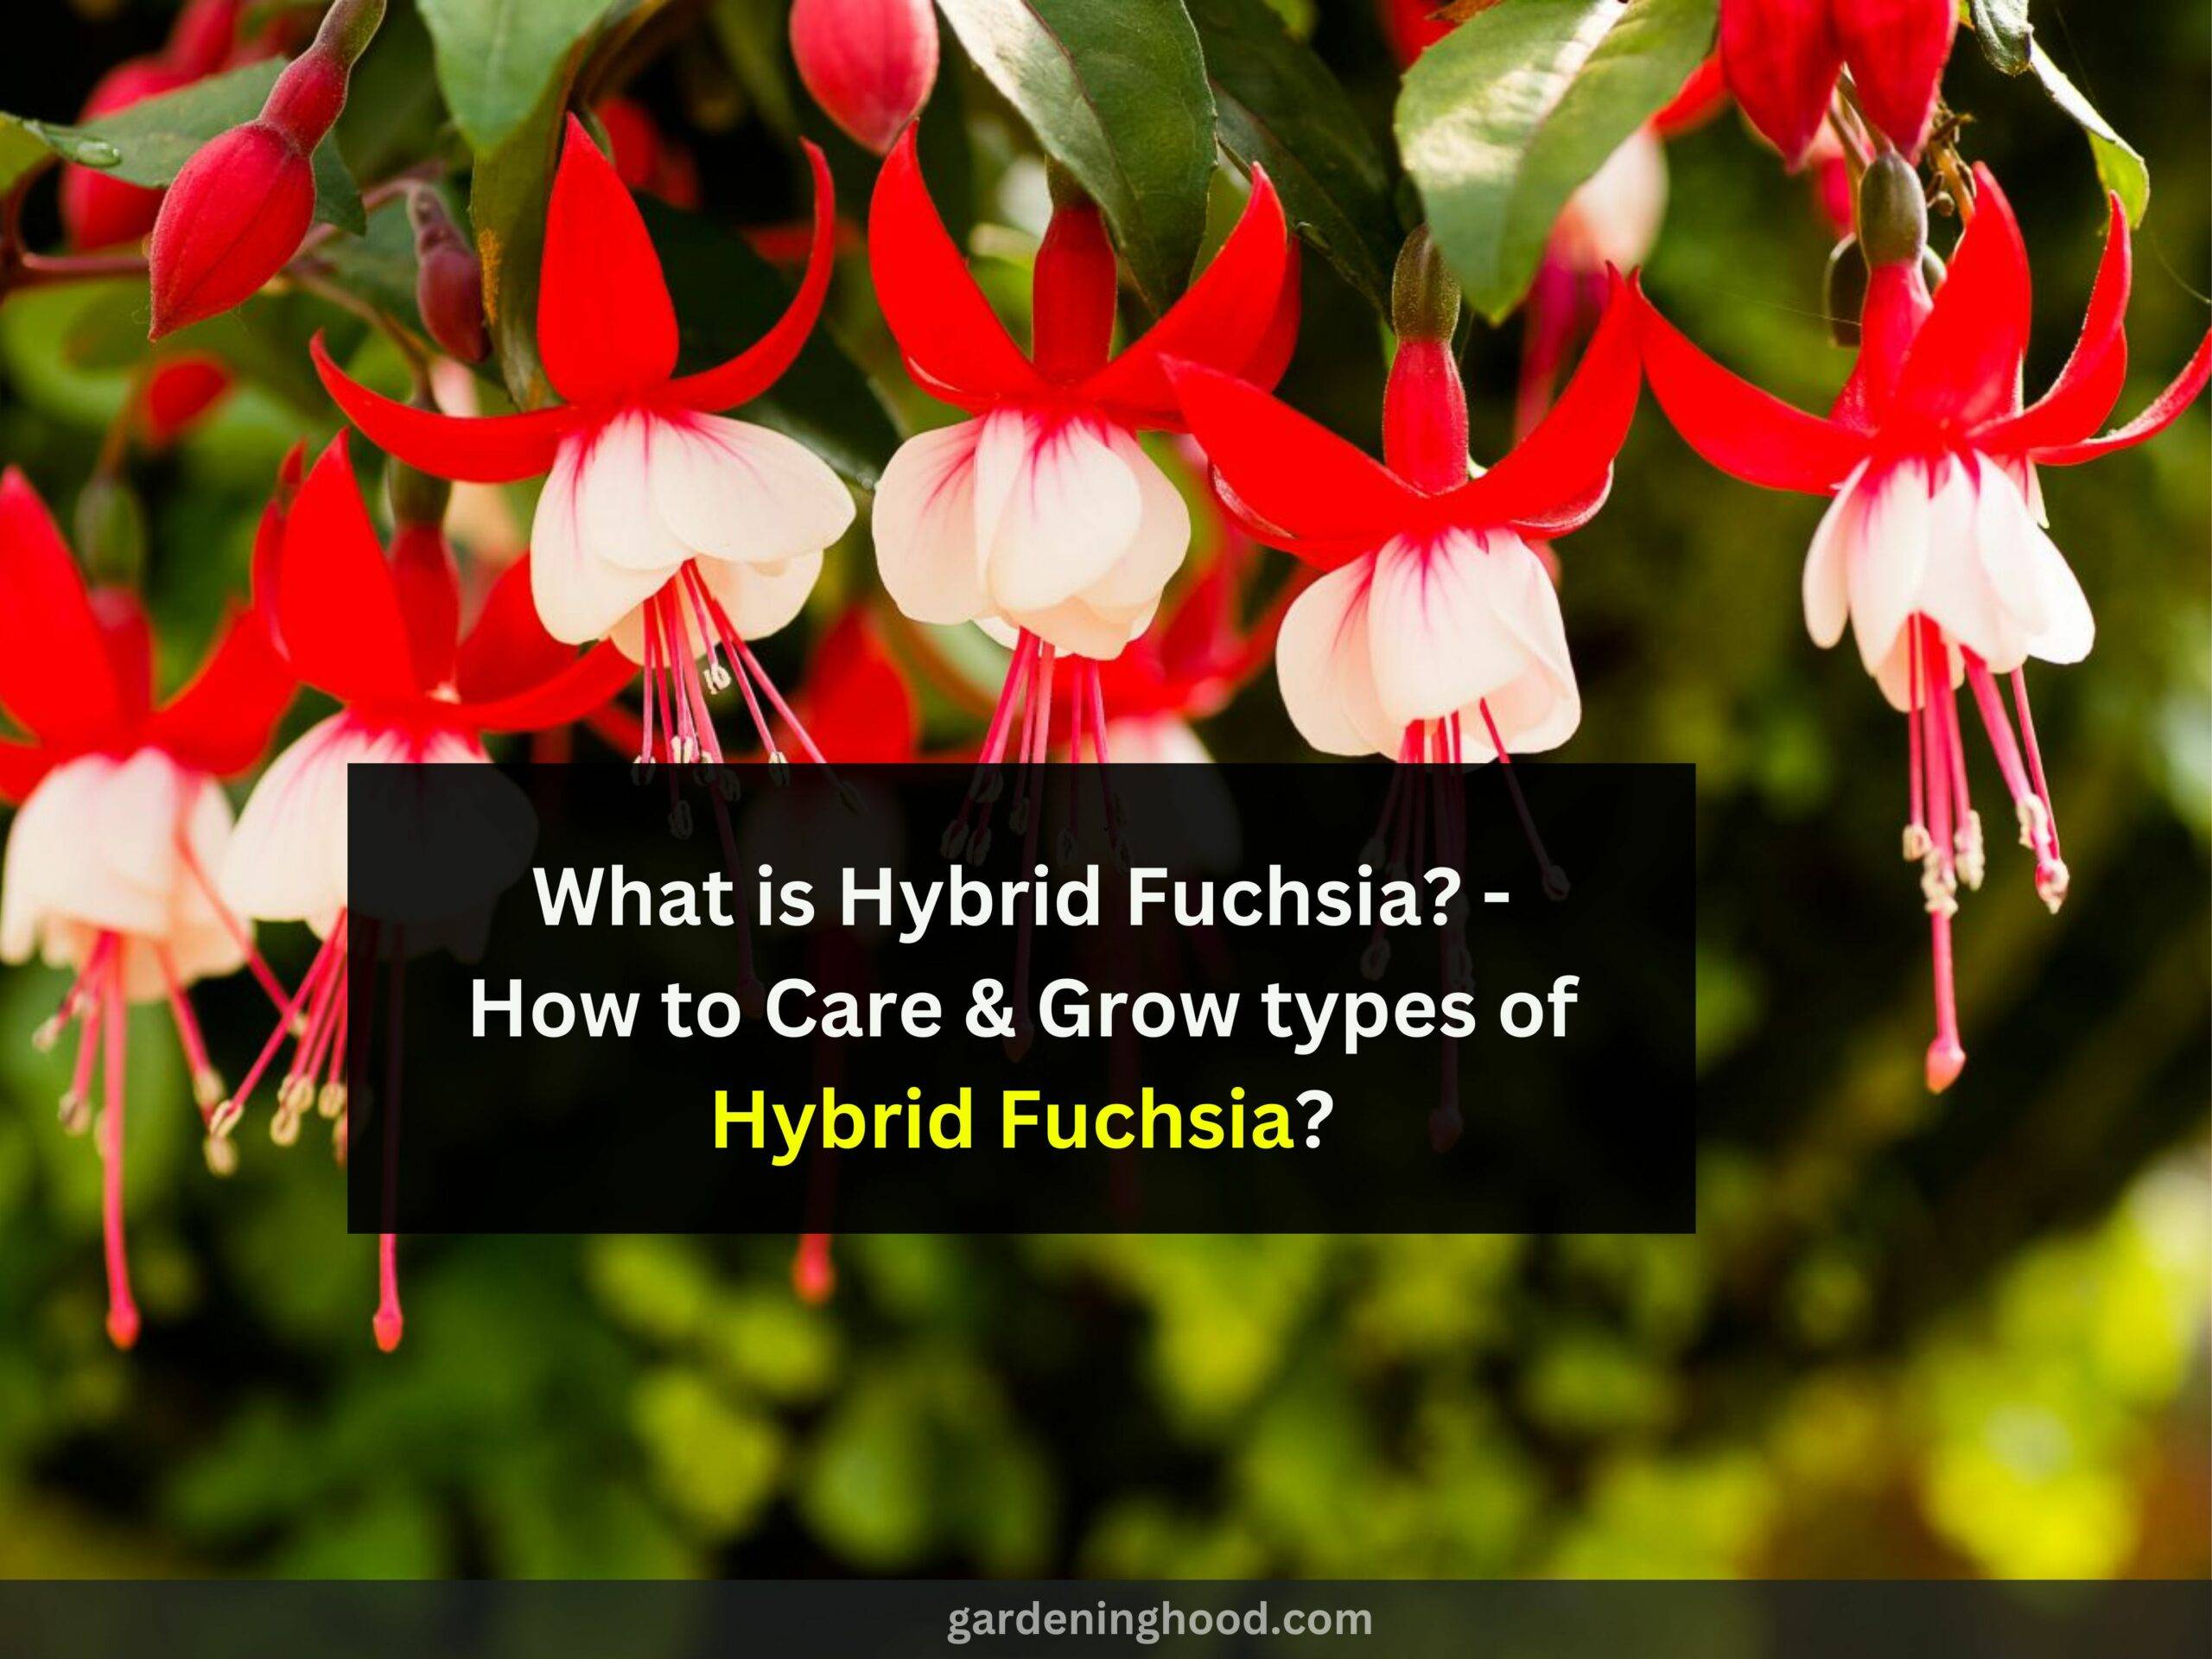 What is Hybrid Fuchsia? - How to Care & Grow types of Hybrid Fuchsia?